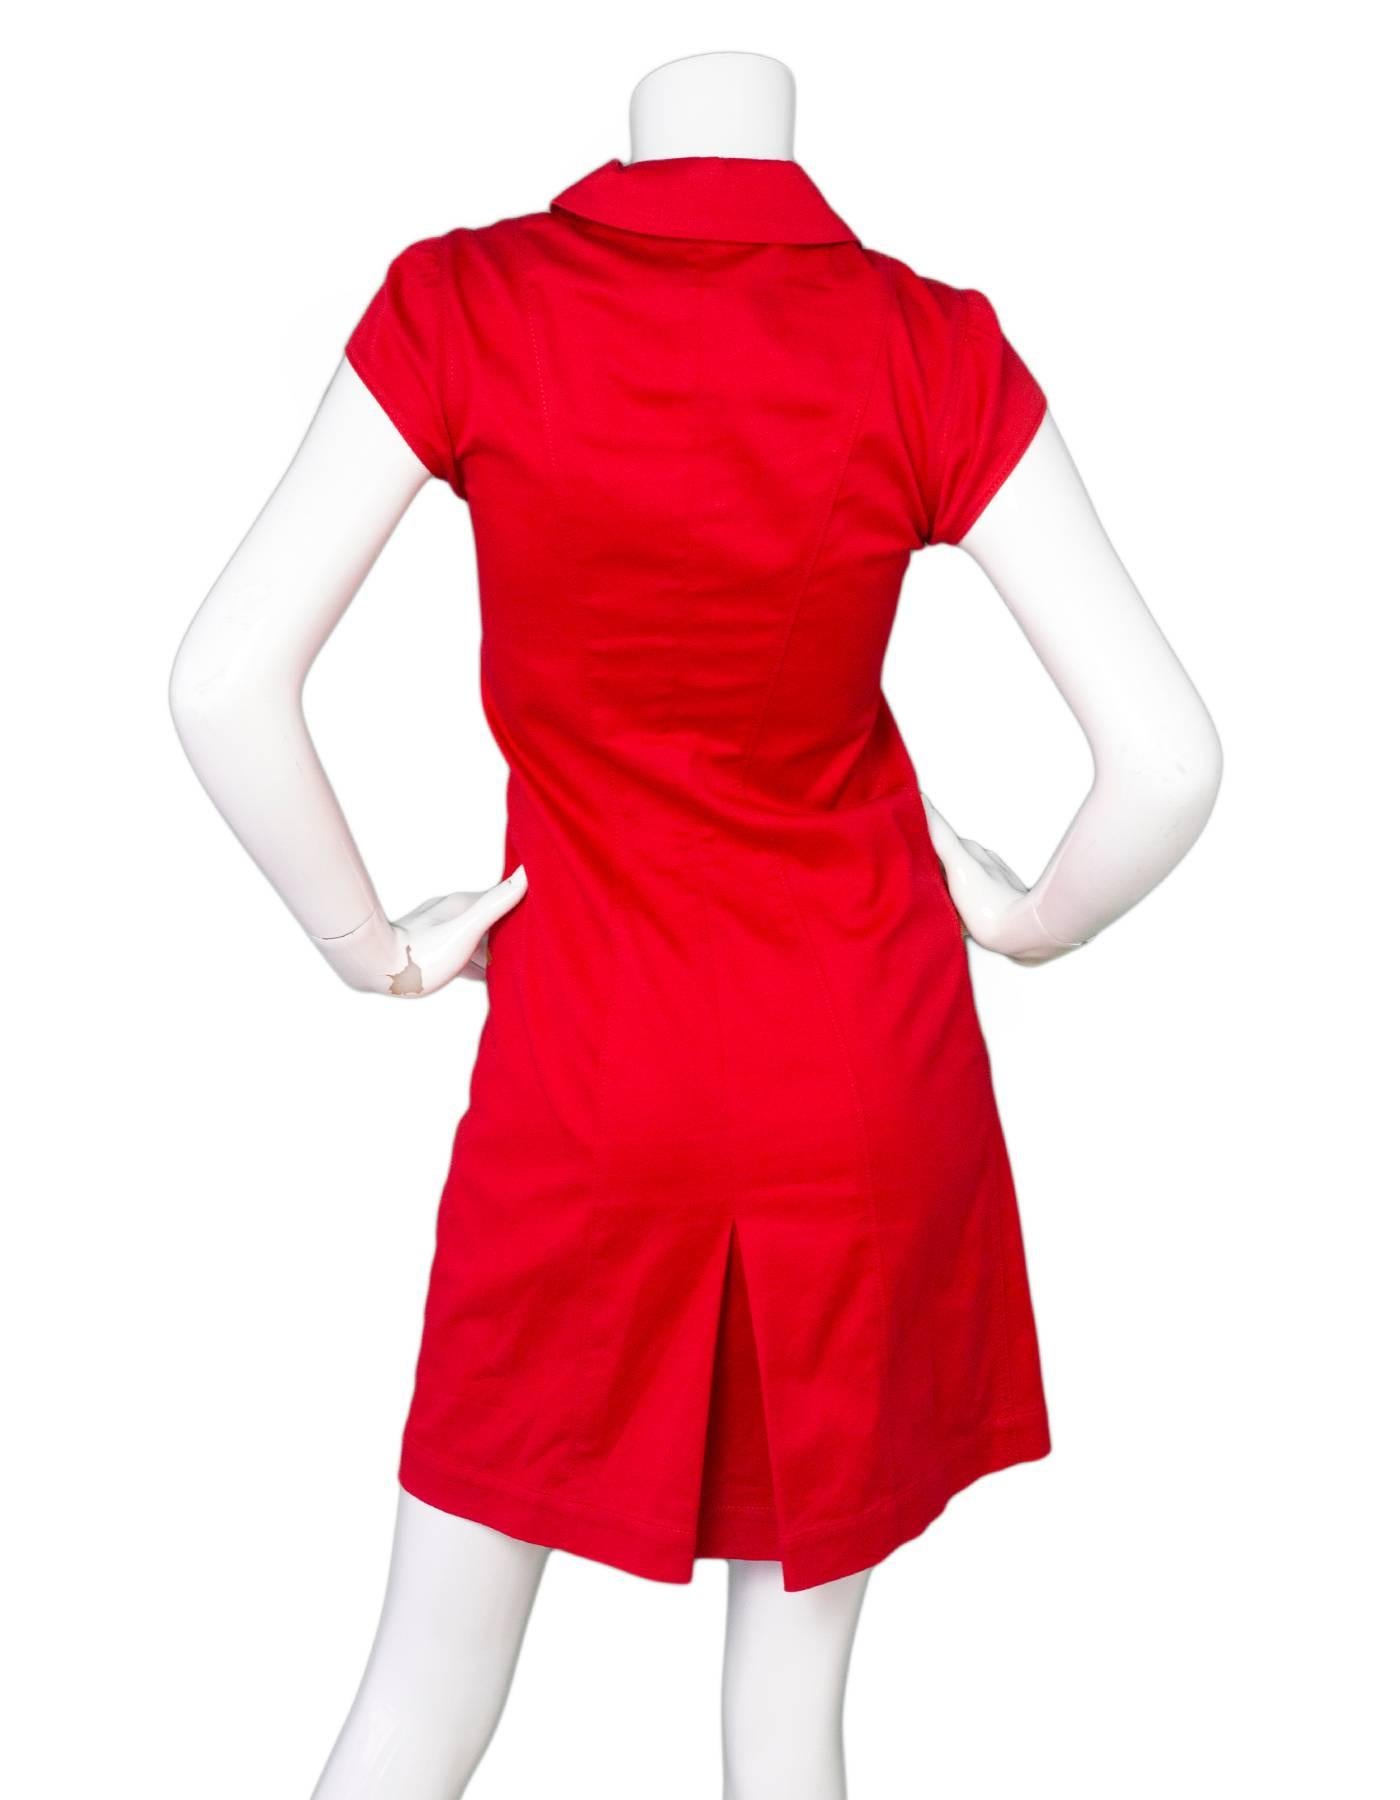 redcap clothing